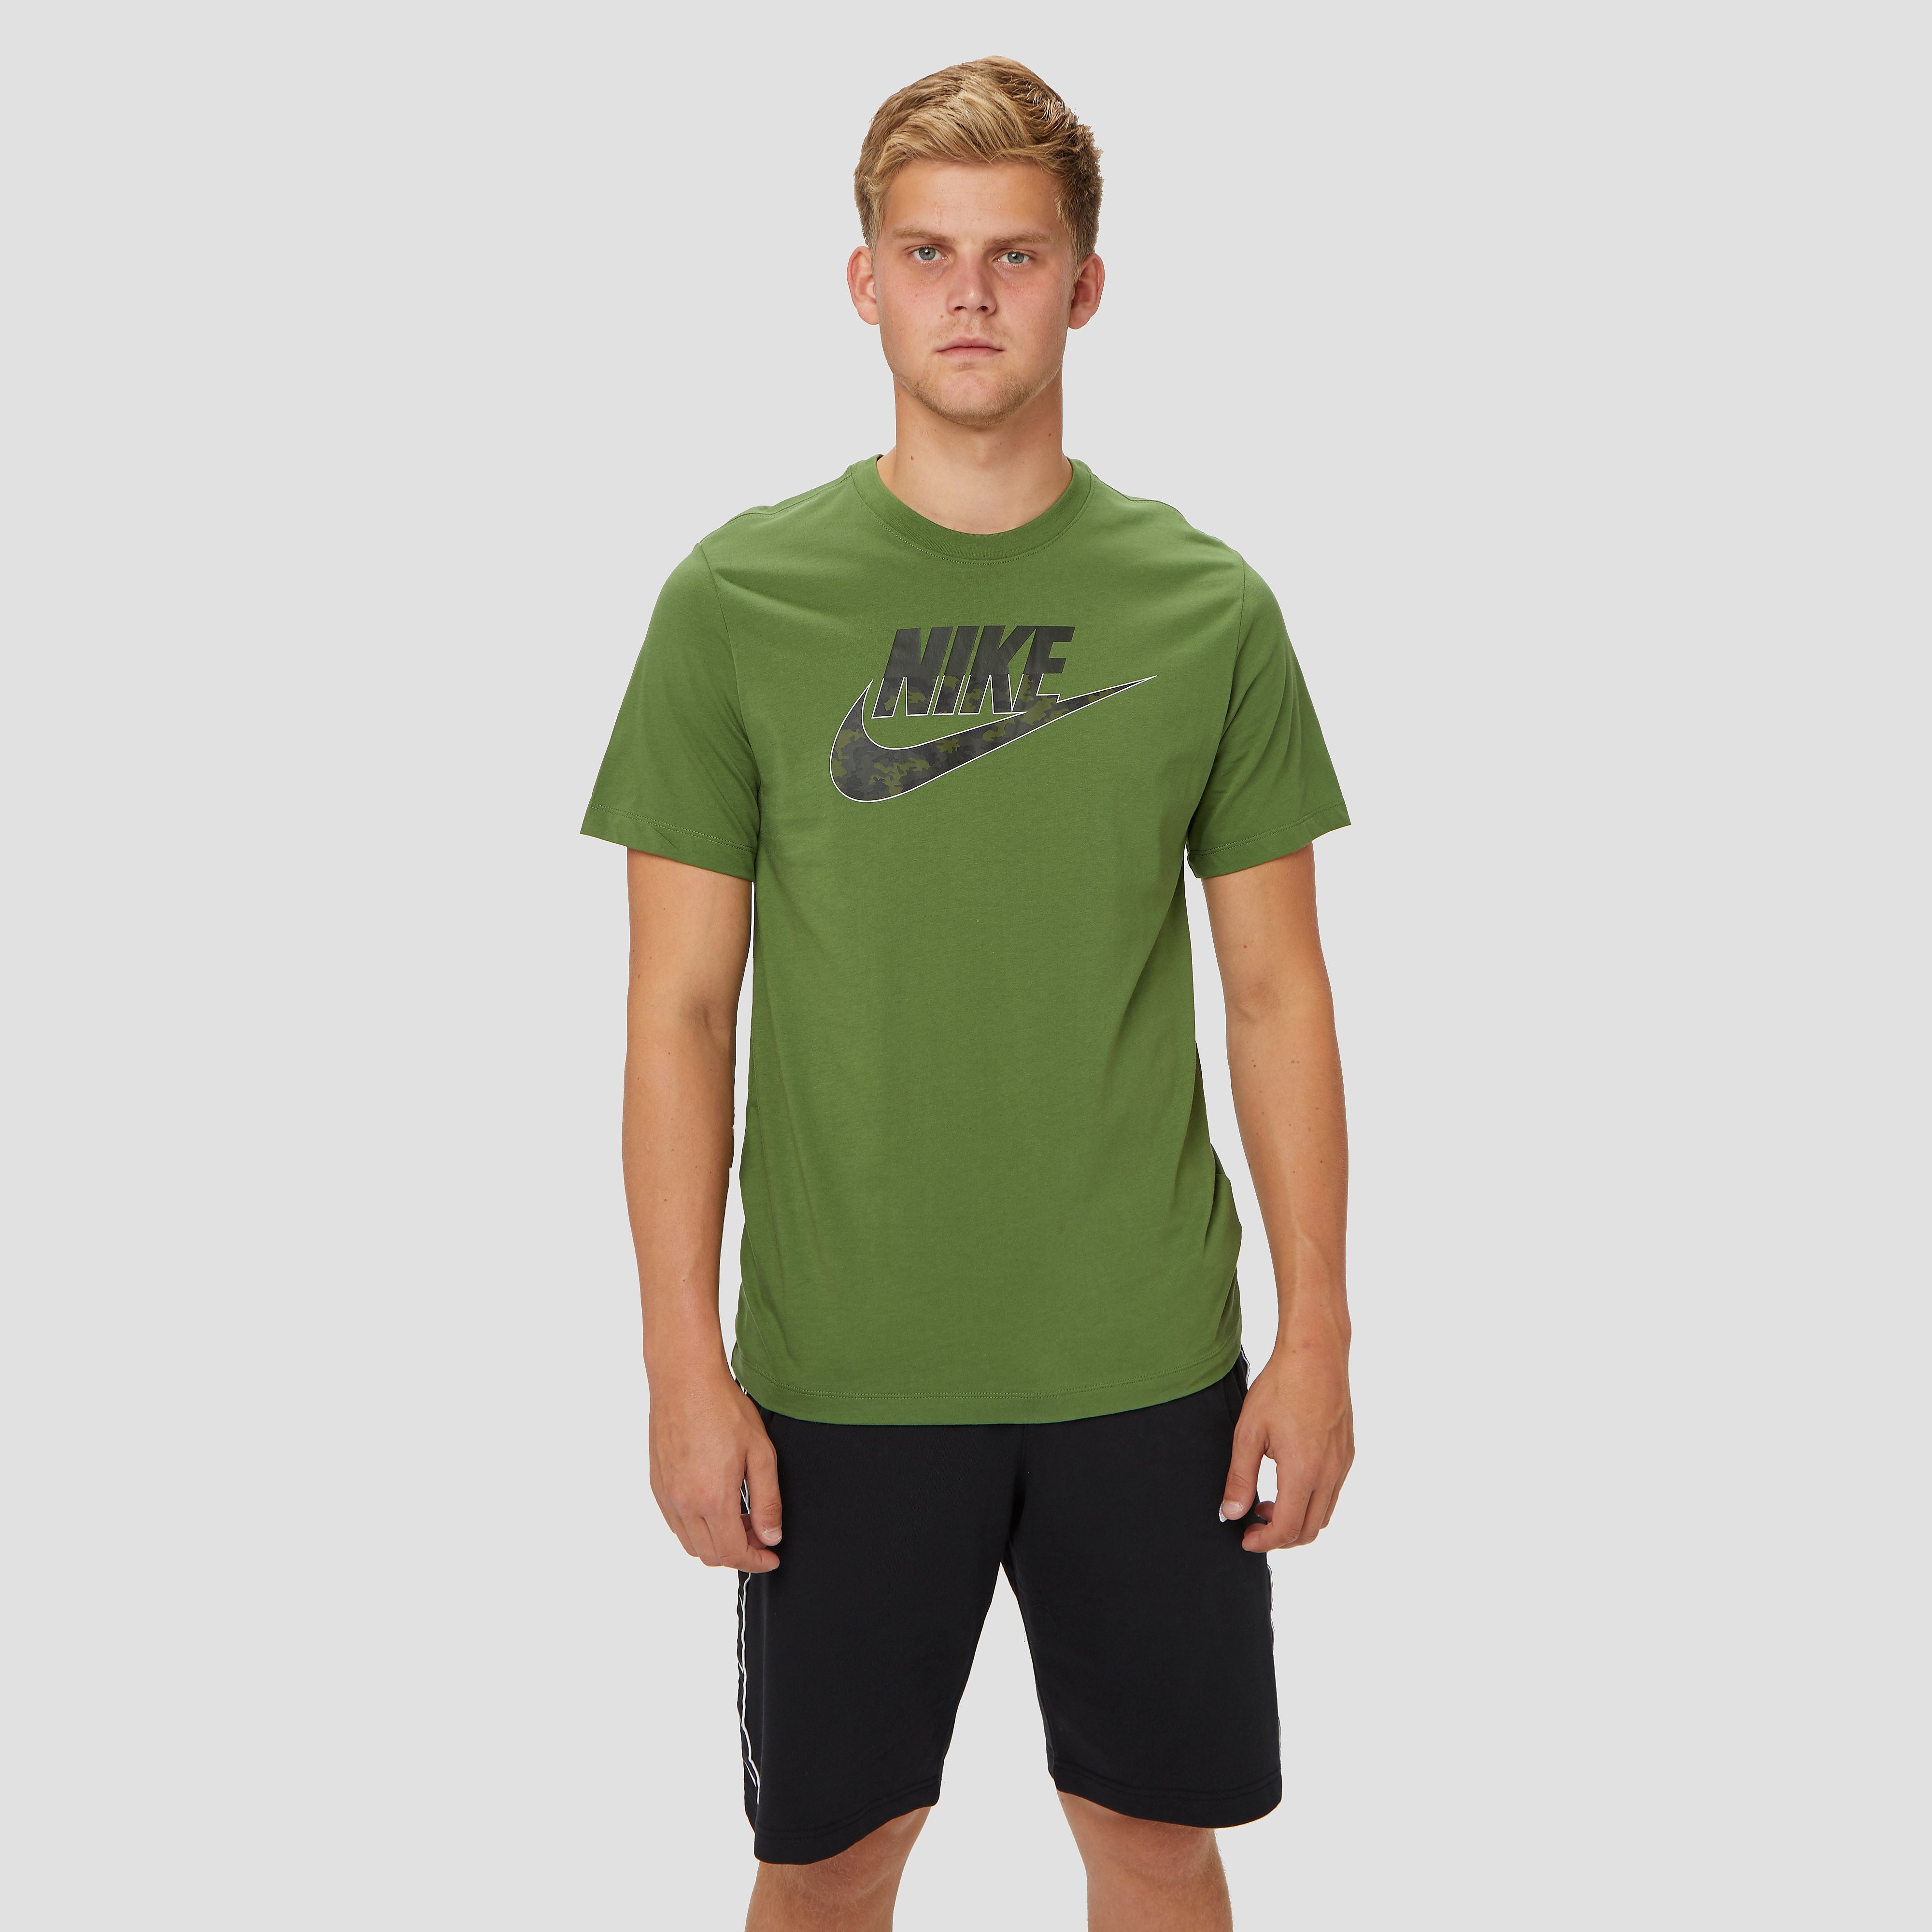 NIKE Sportswear camouflage shirt groen heren Heren